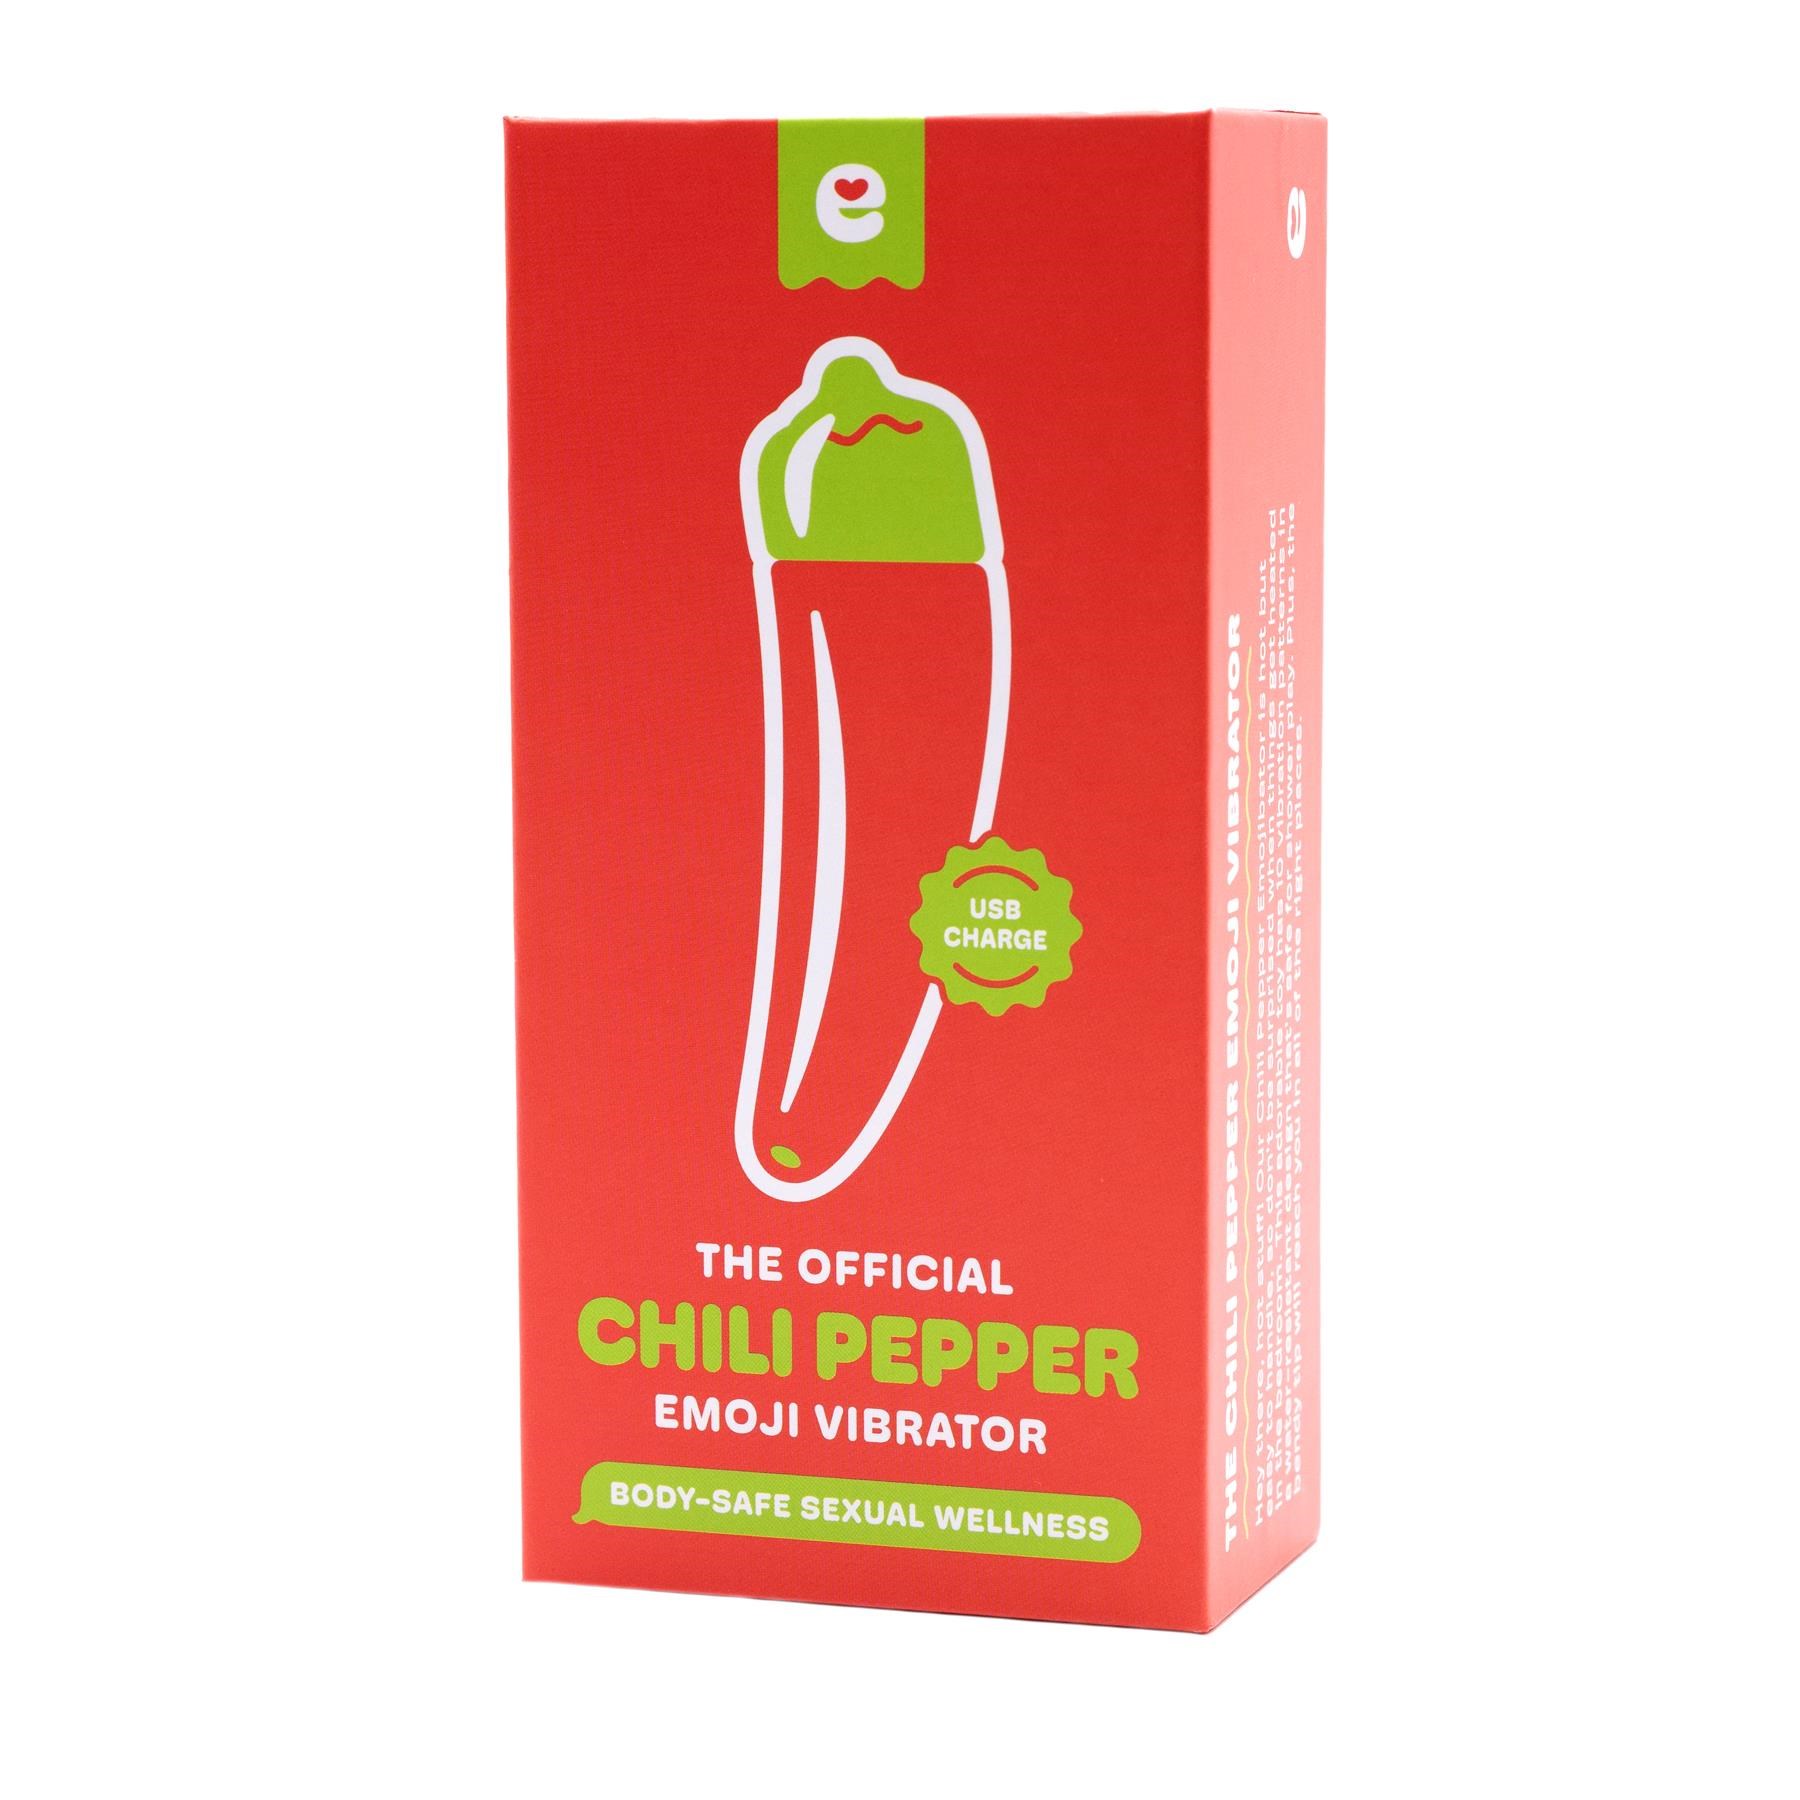 Emojibator Chili Pepper Emoji Vibrator - Packaging